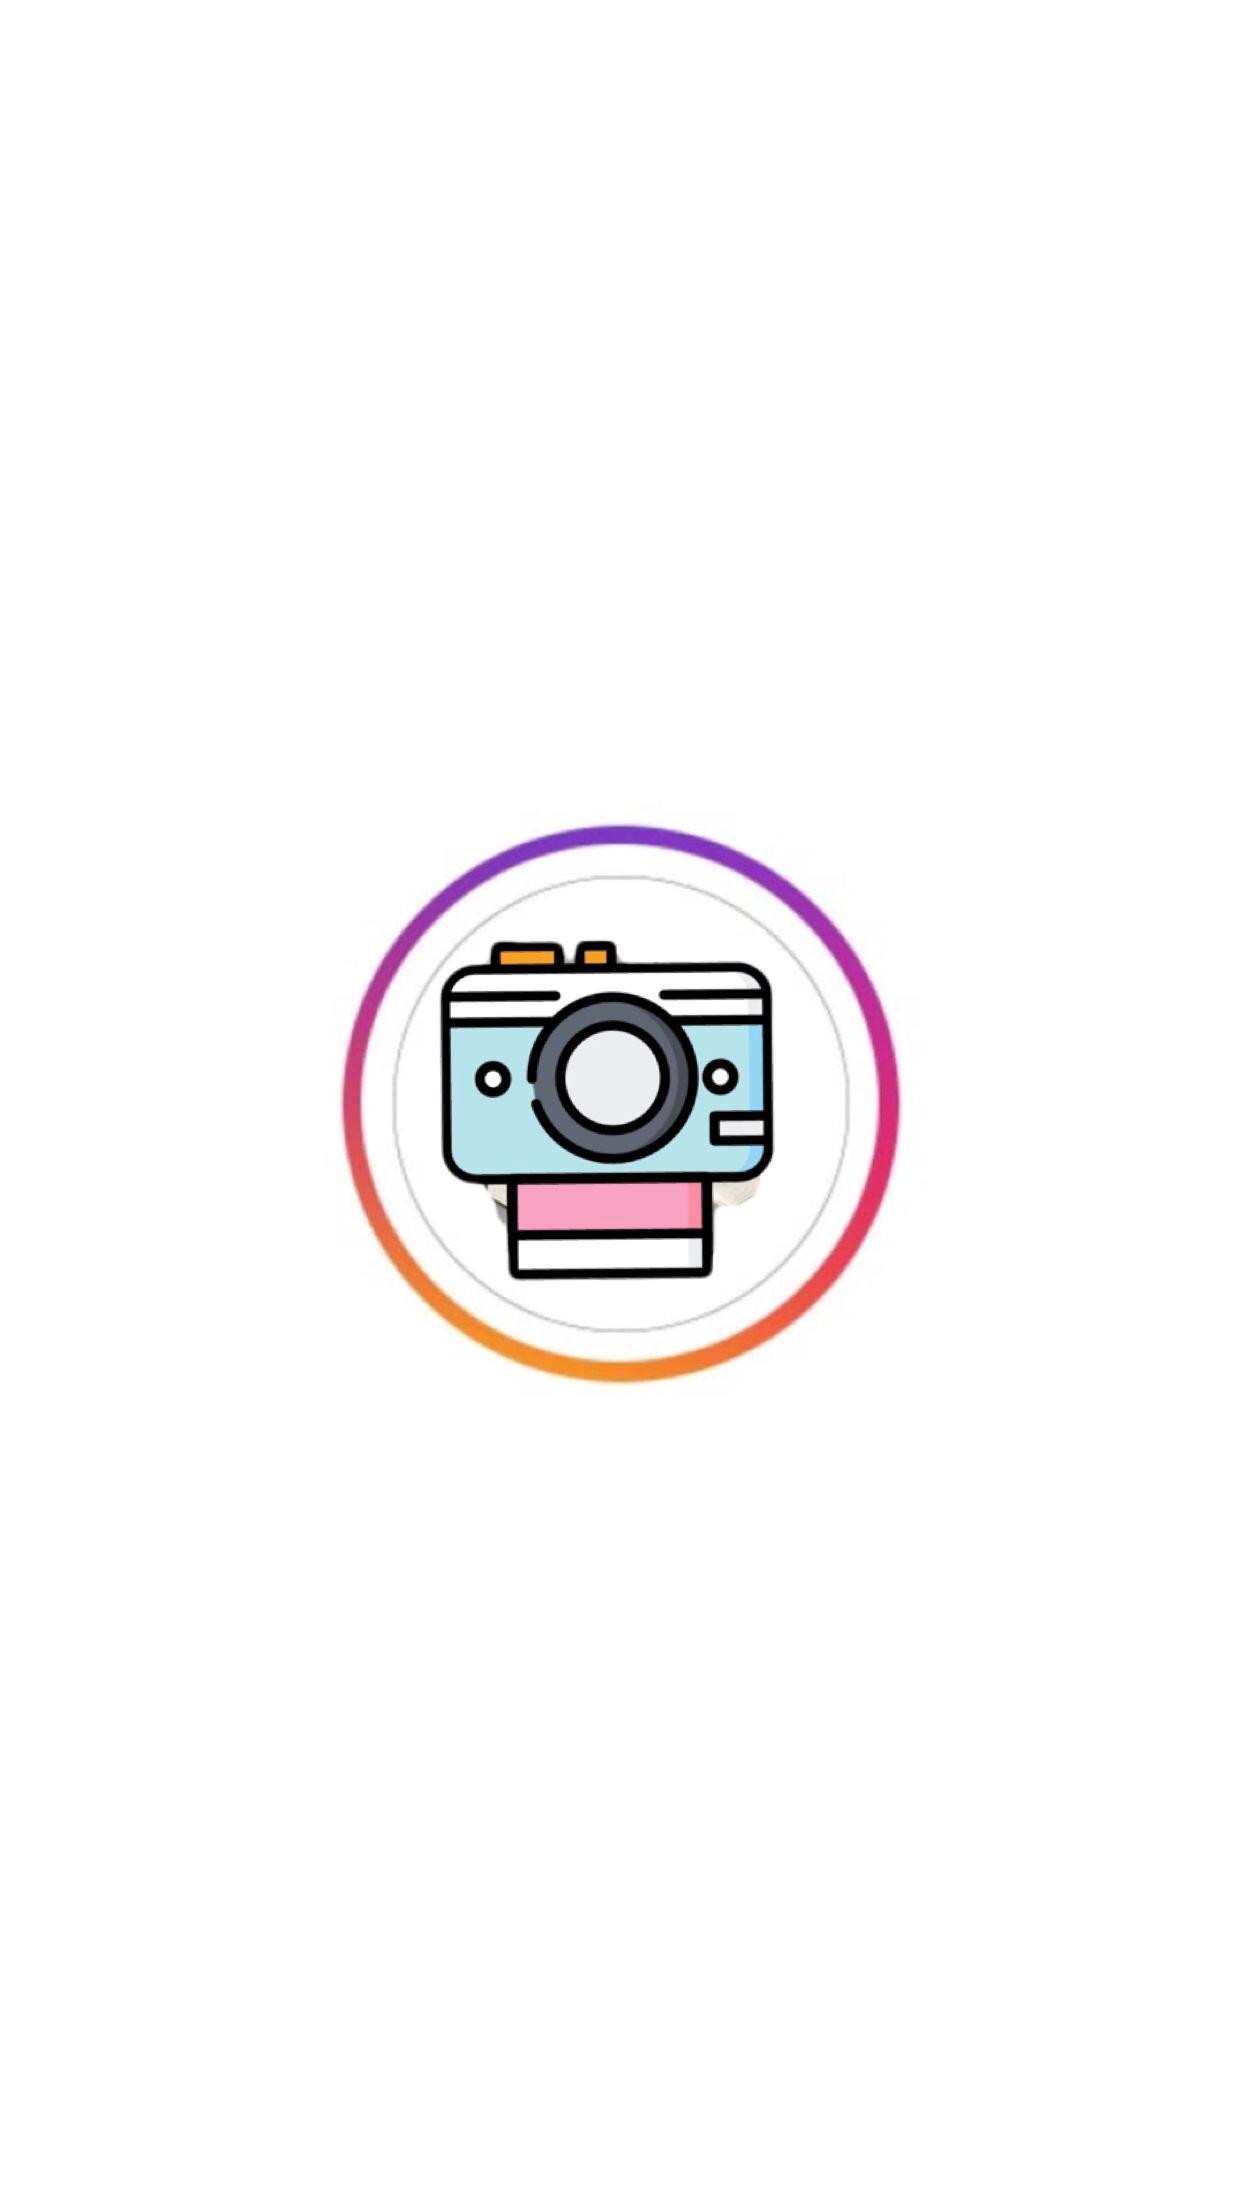 Cute Instagram Logo - Pin by Vasilena✨ on Instagram icons | Pinterest | Instagram ...